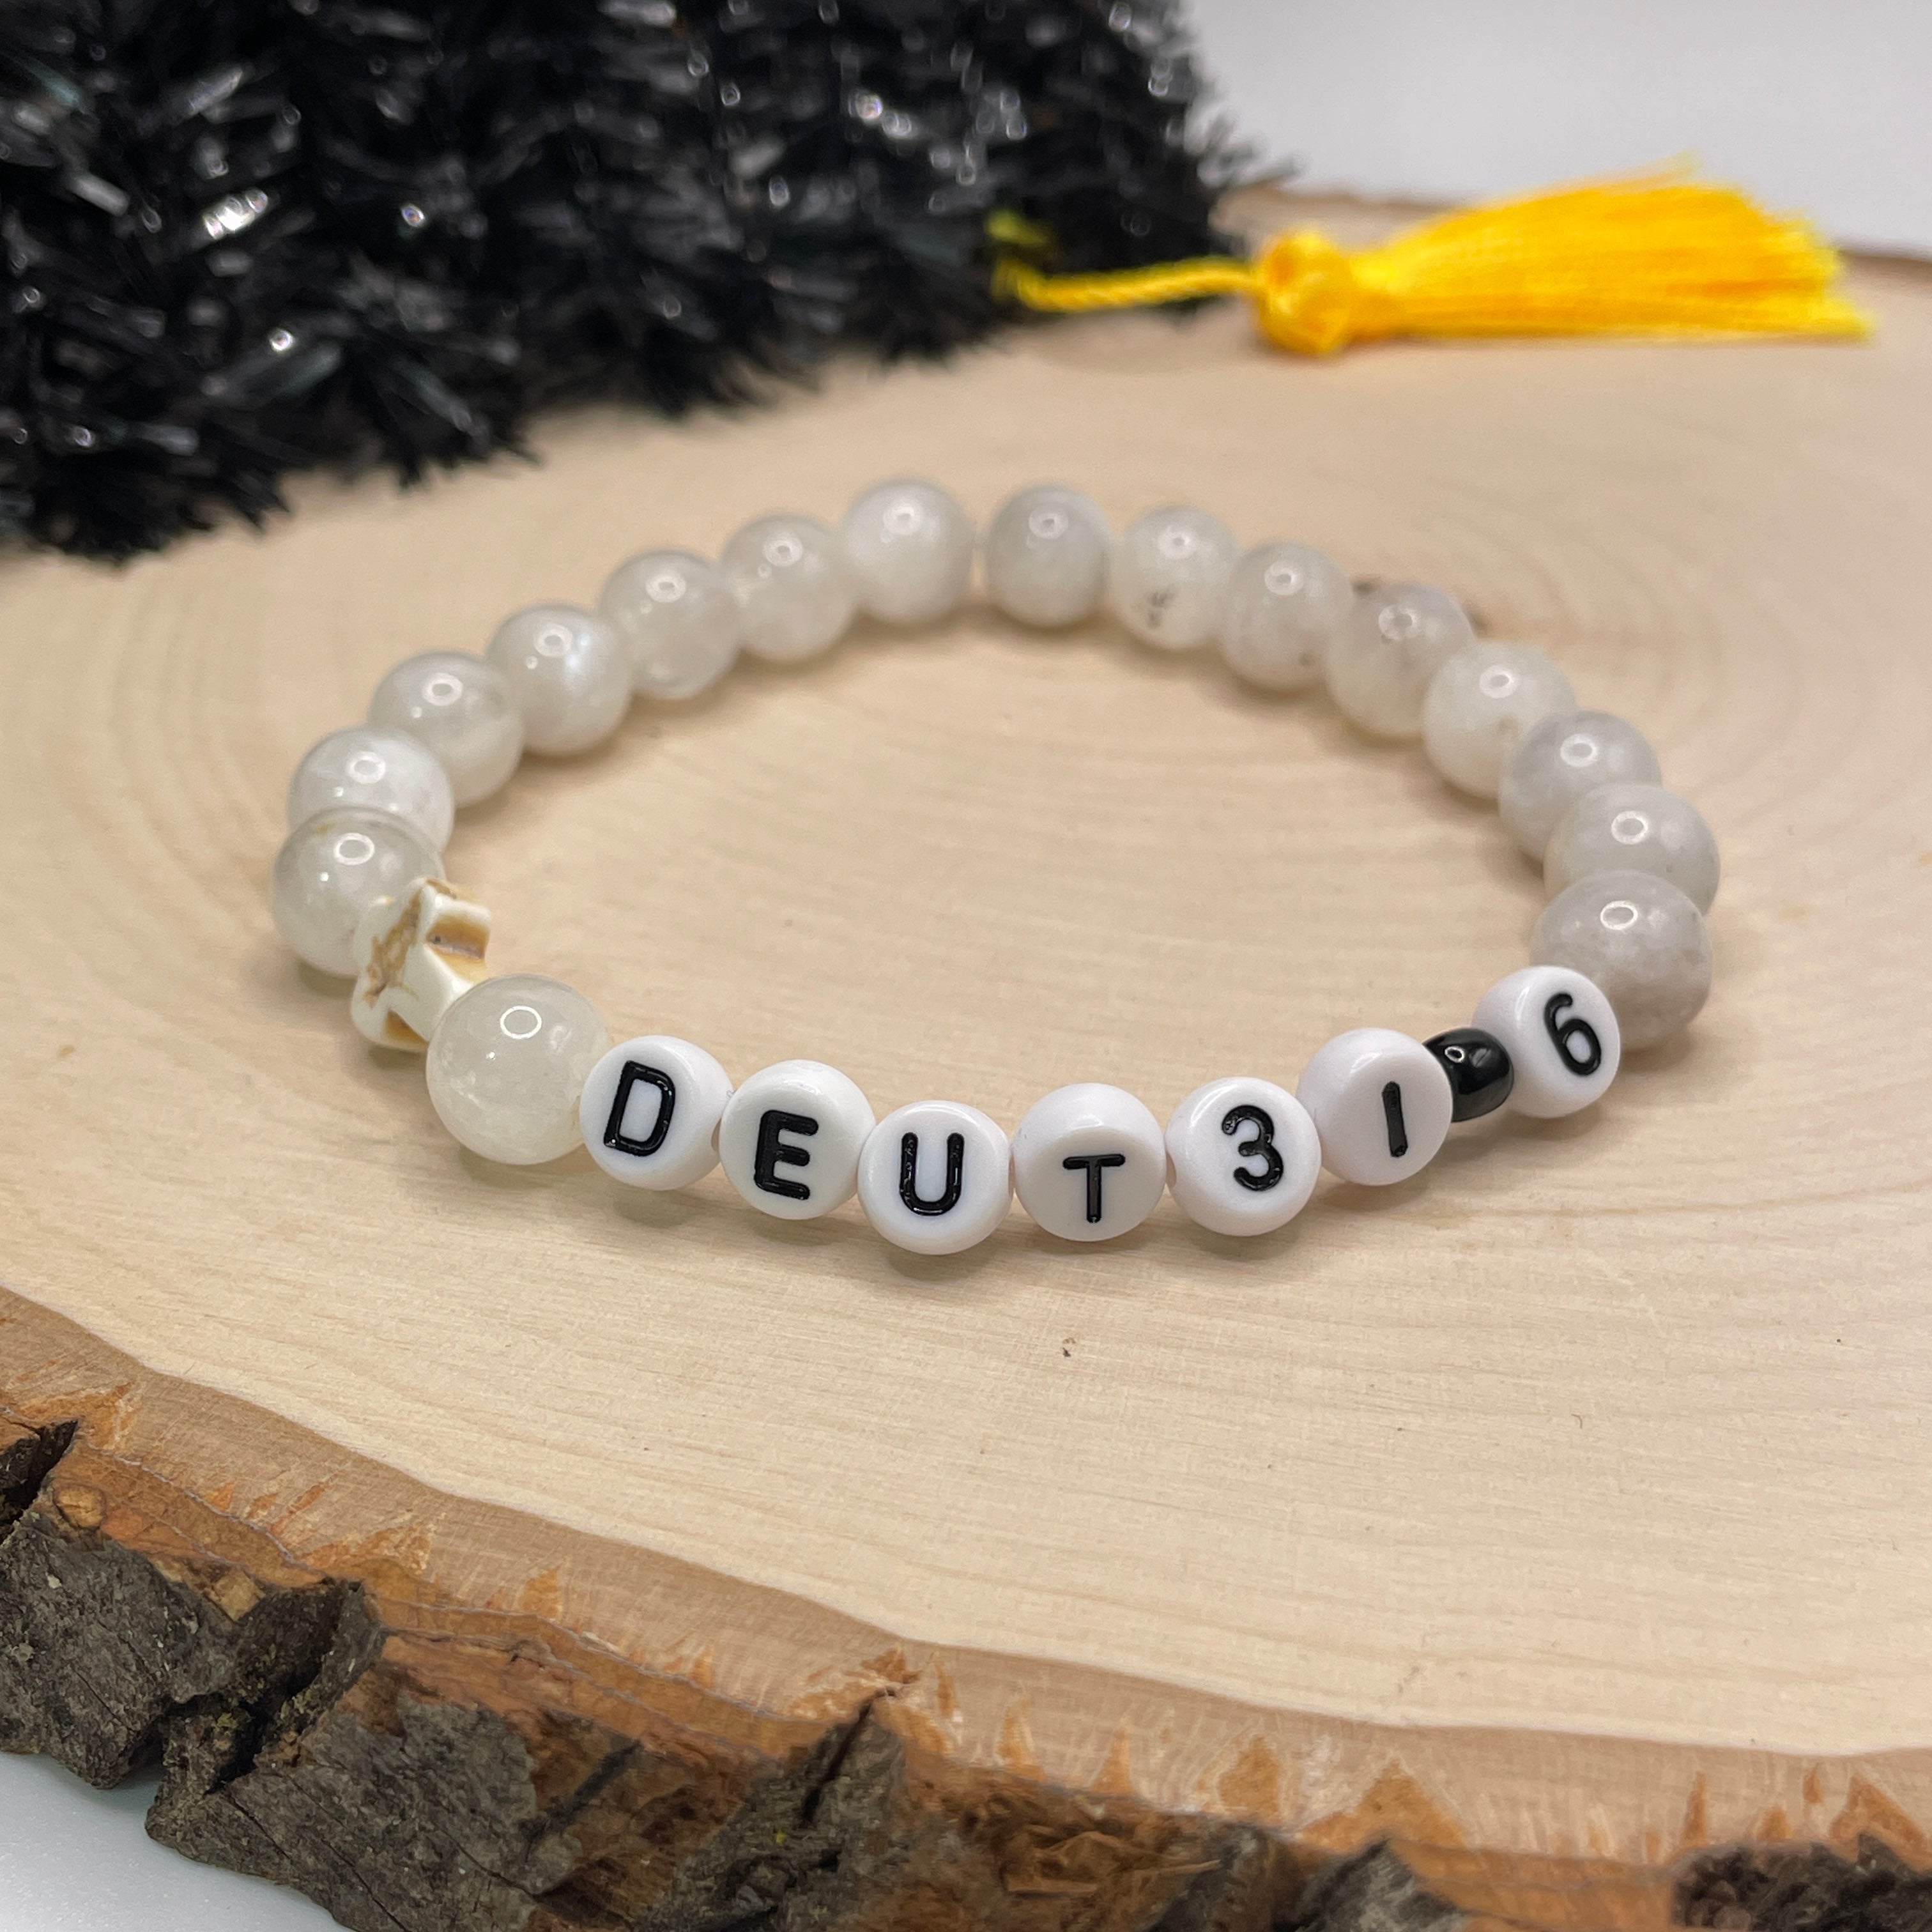 Deuteronomy bracelet